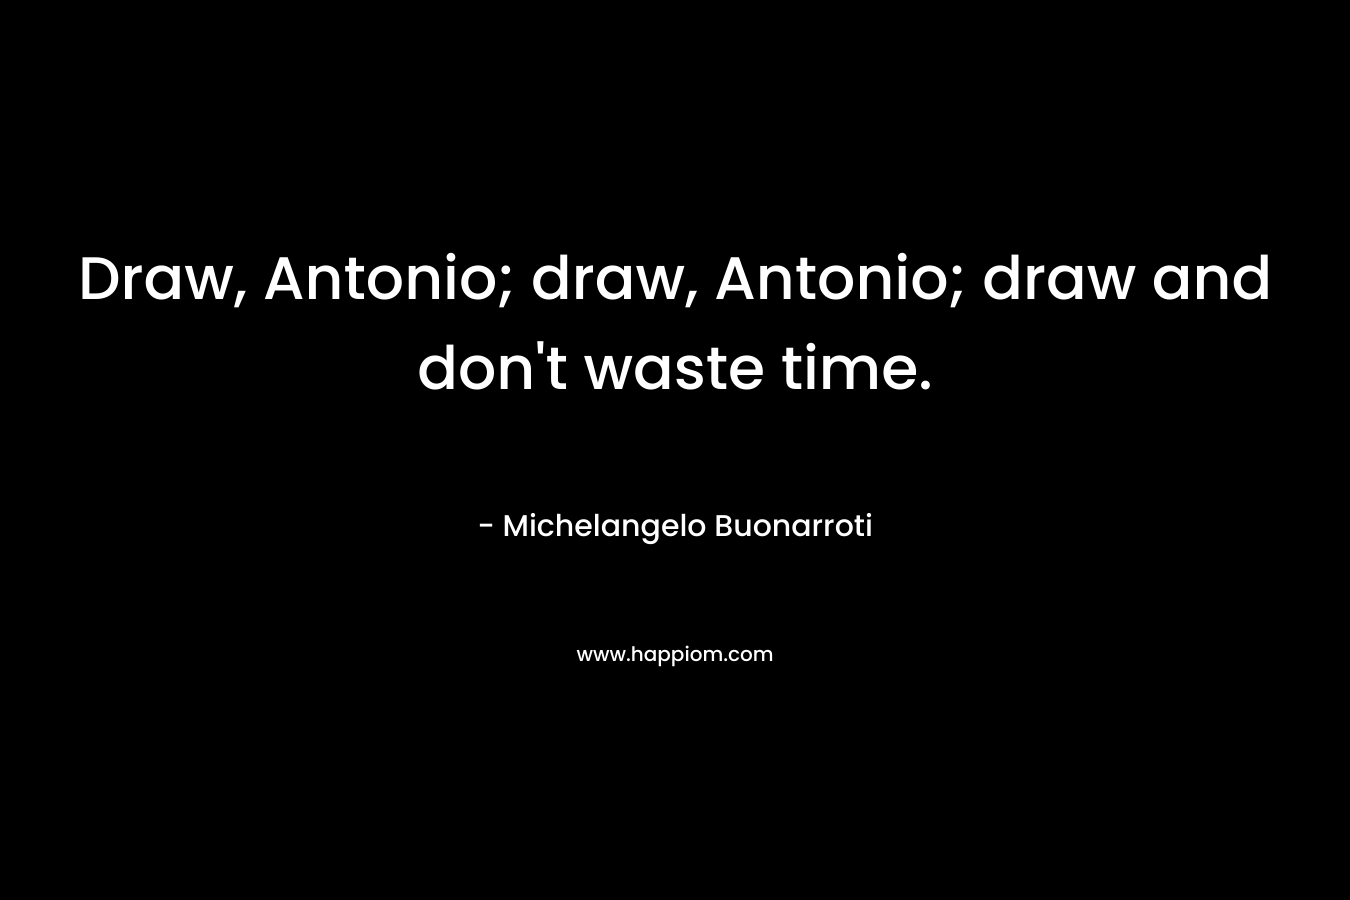 Draw, Antonio; draw, Antonio; draw and don't waste time.